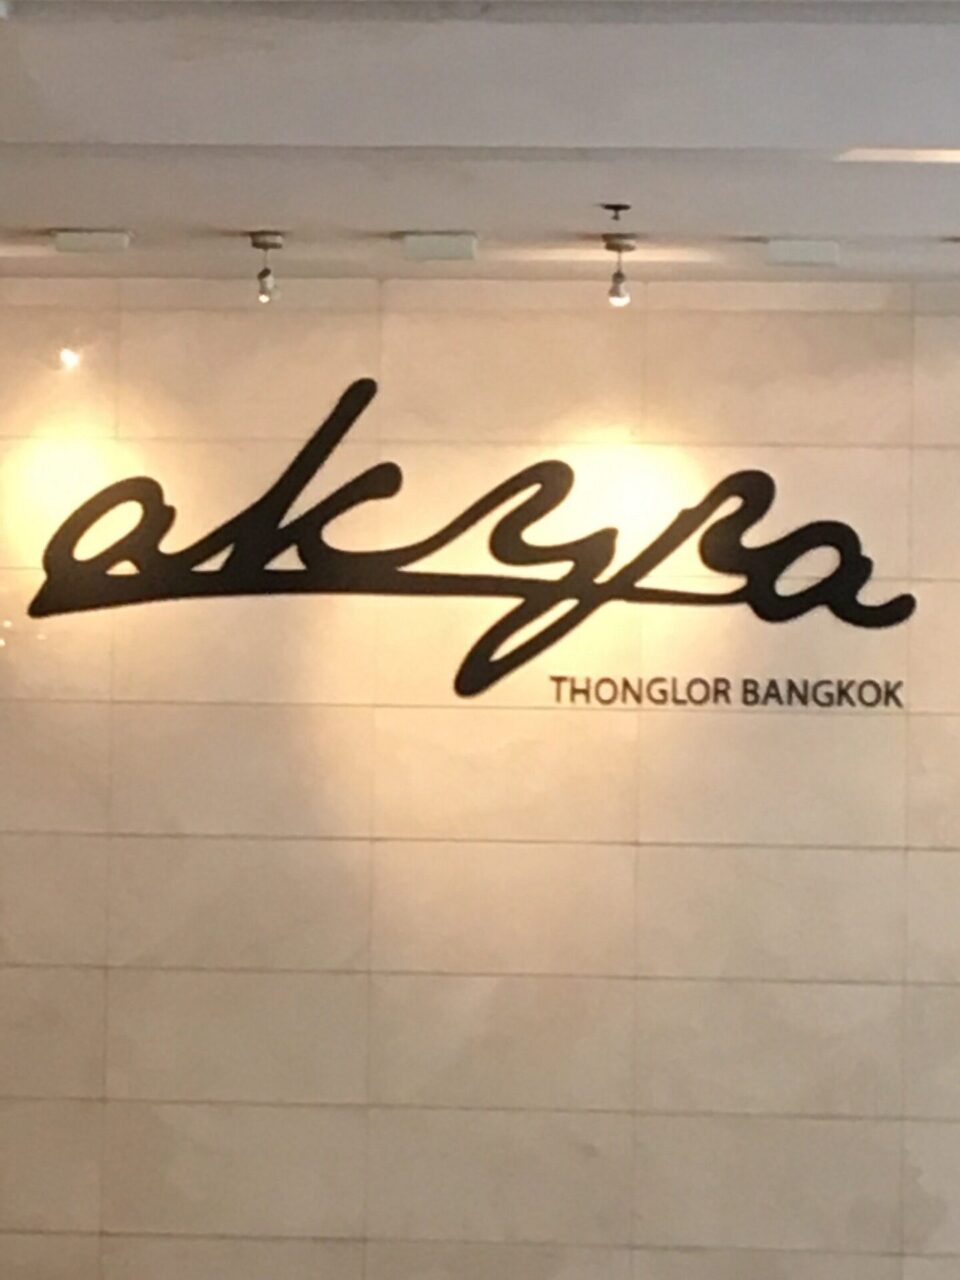 Akyra Thonglor Bangkok